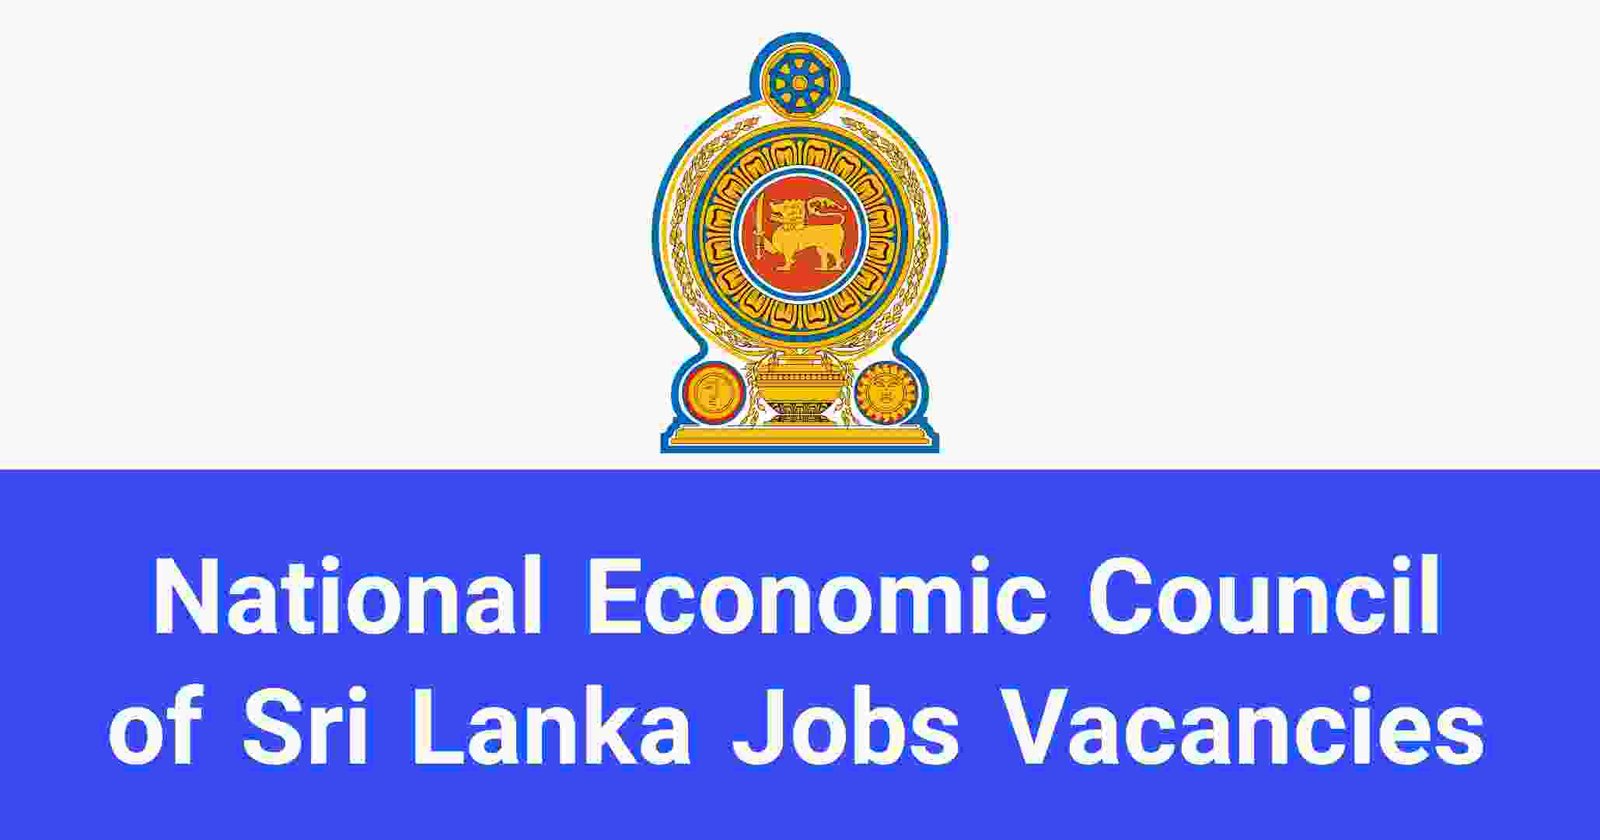 National Economic Council of Sri Lanka Jobs Vacancies